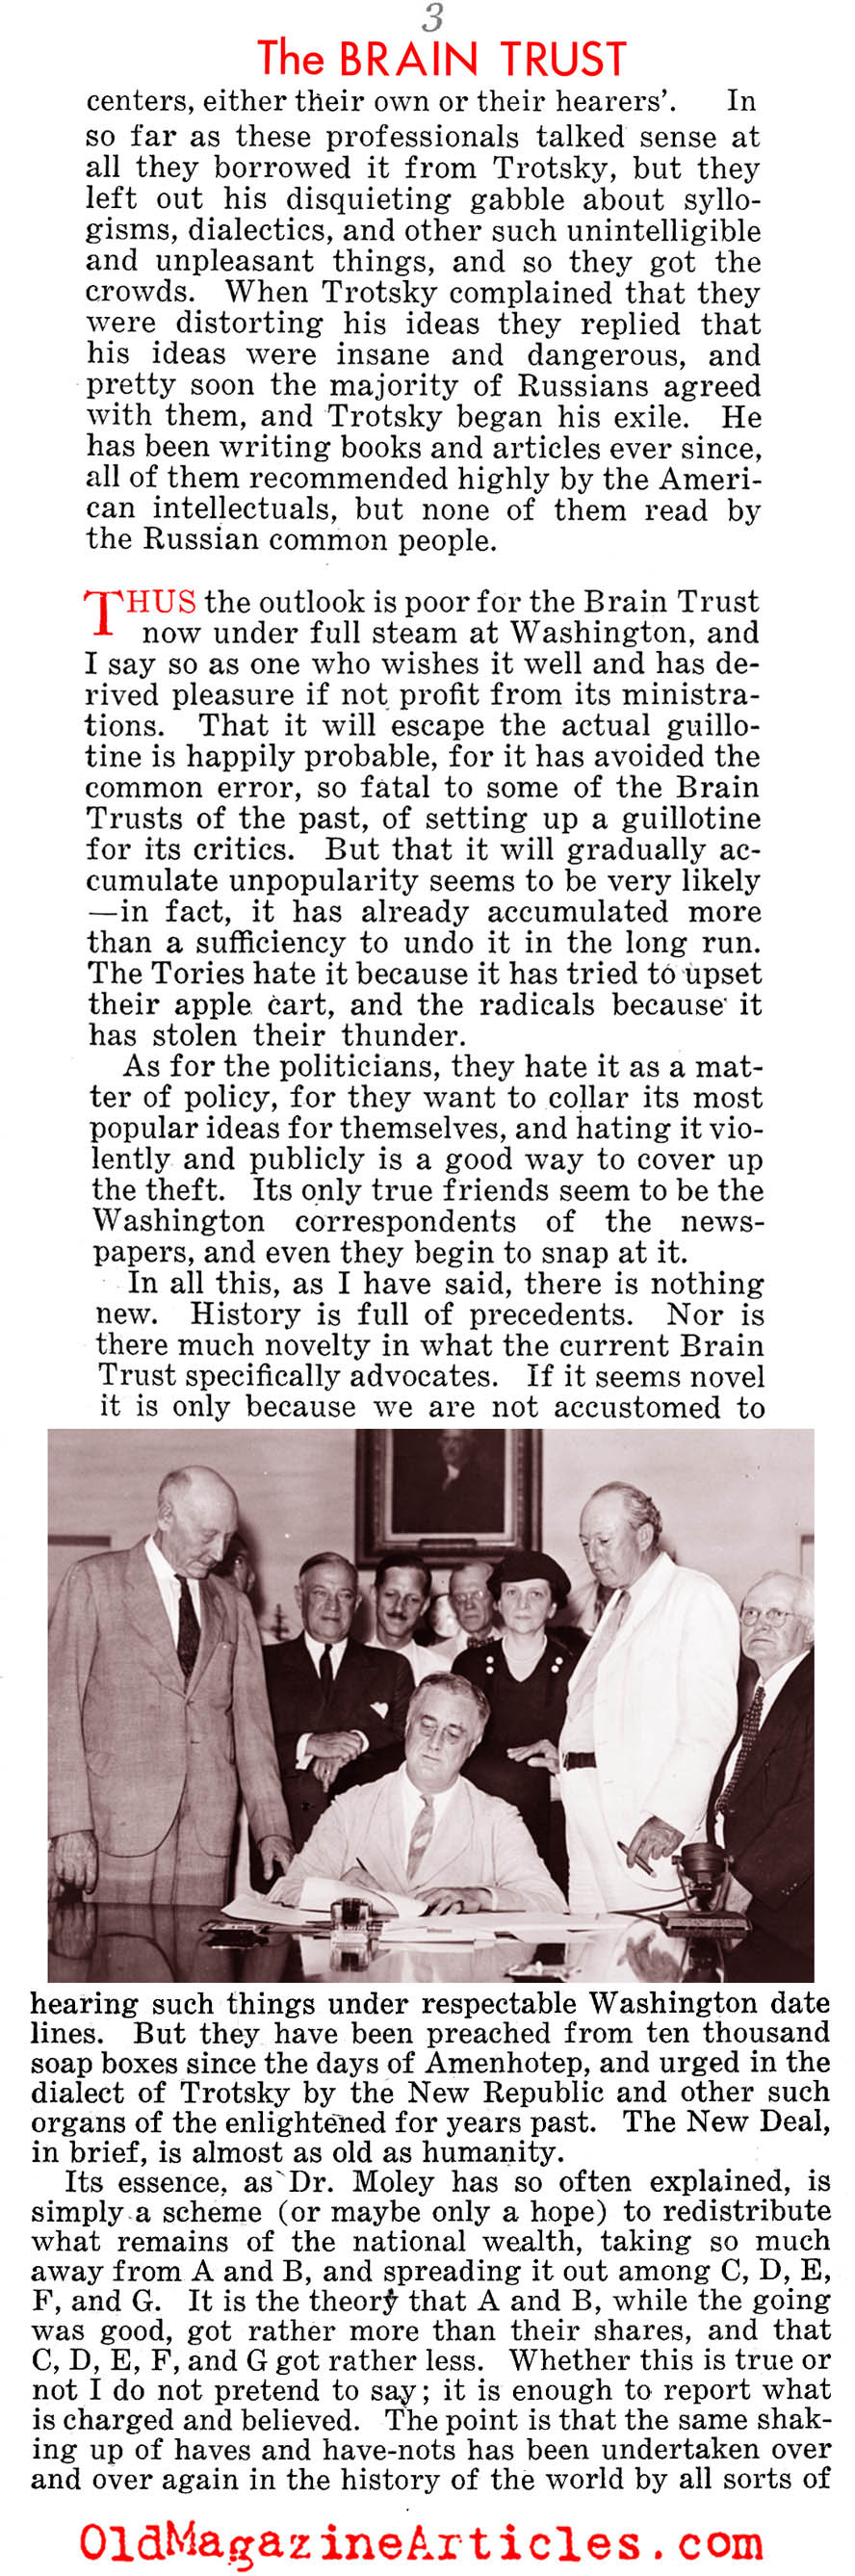 H.L. Mencken on the Brain Trust (Liberty Magazine, 1934)